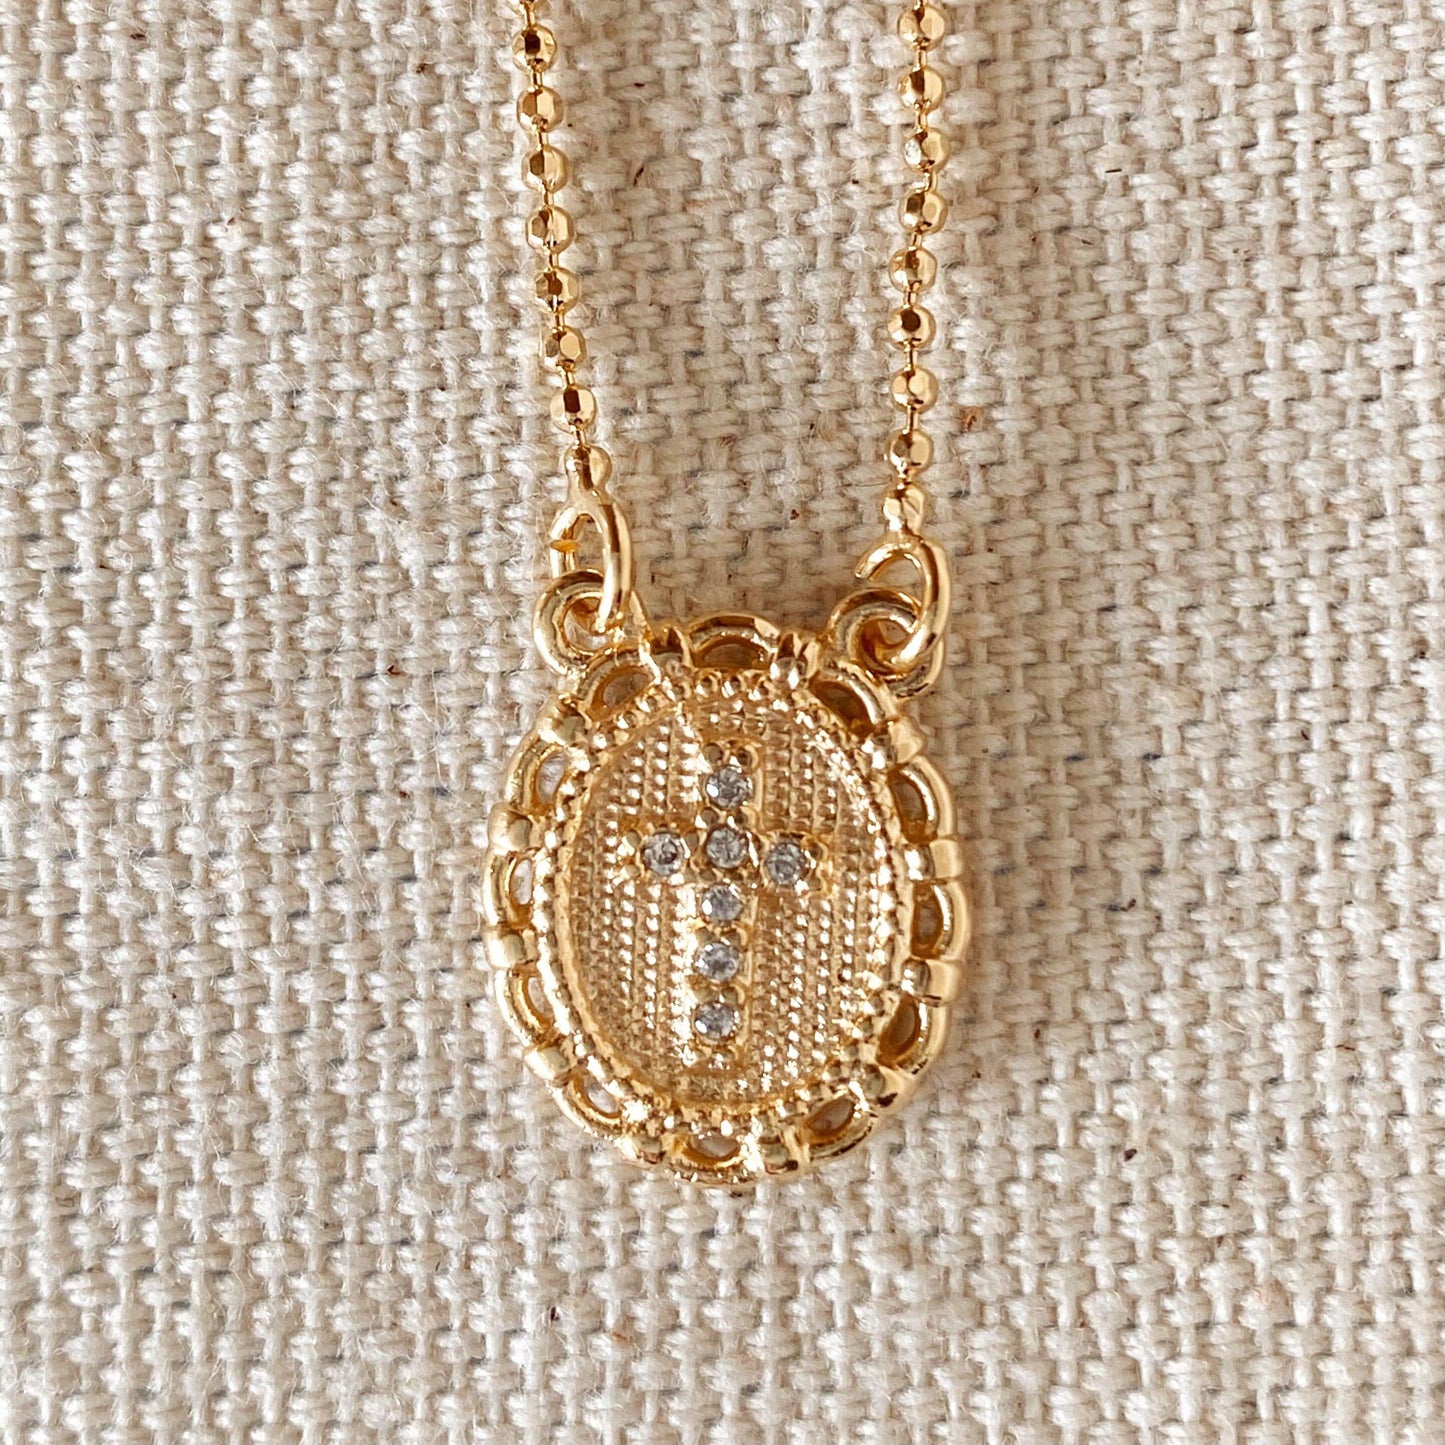 GoldFi 18k Gold Filled Cross Plate Scapular Necklace